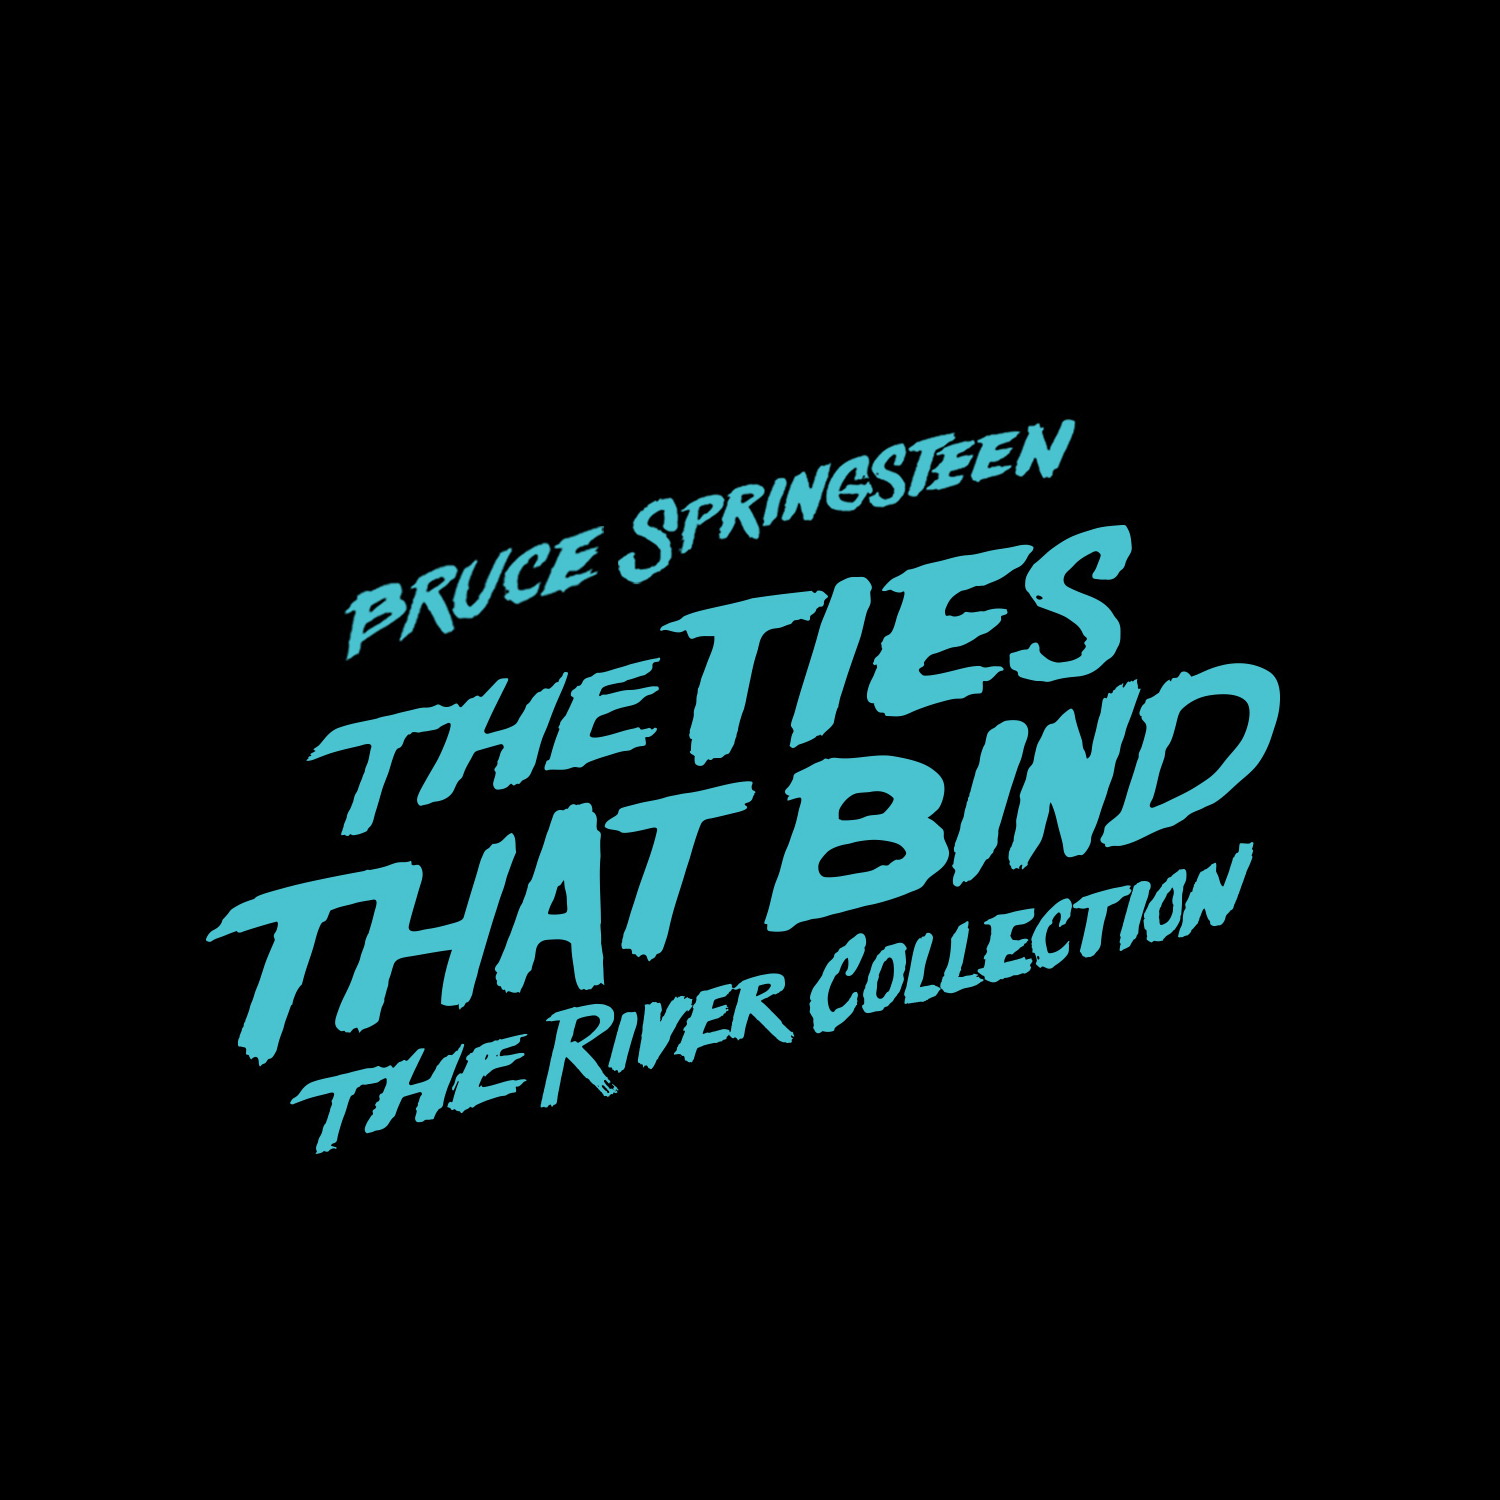 Bruce Springteen - The Ties That Bind